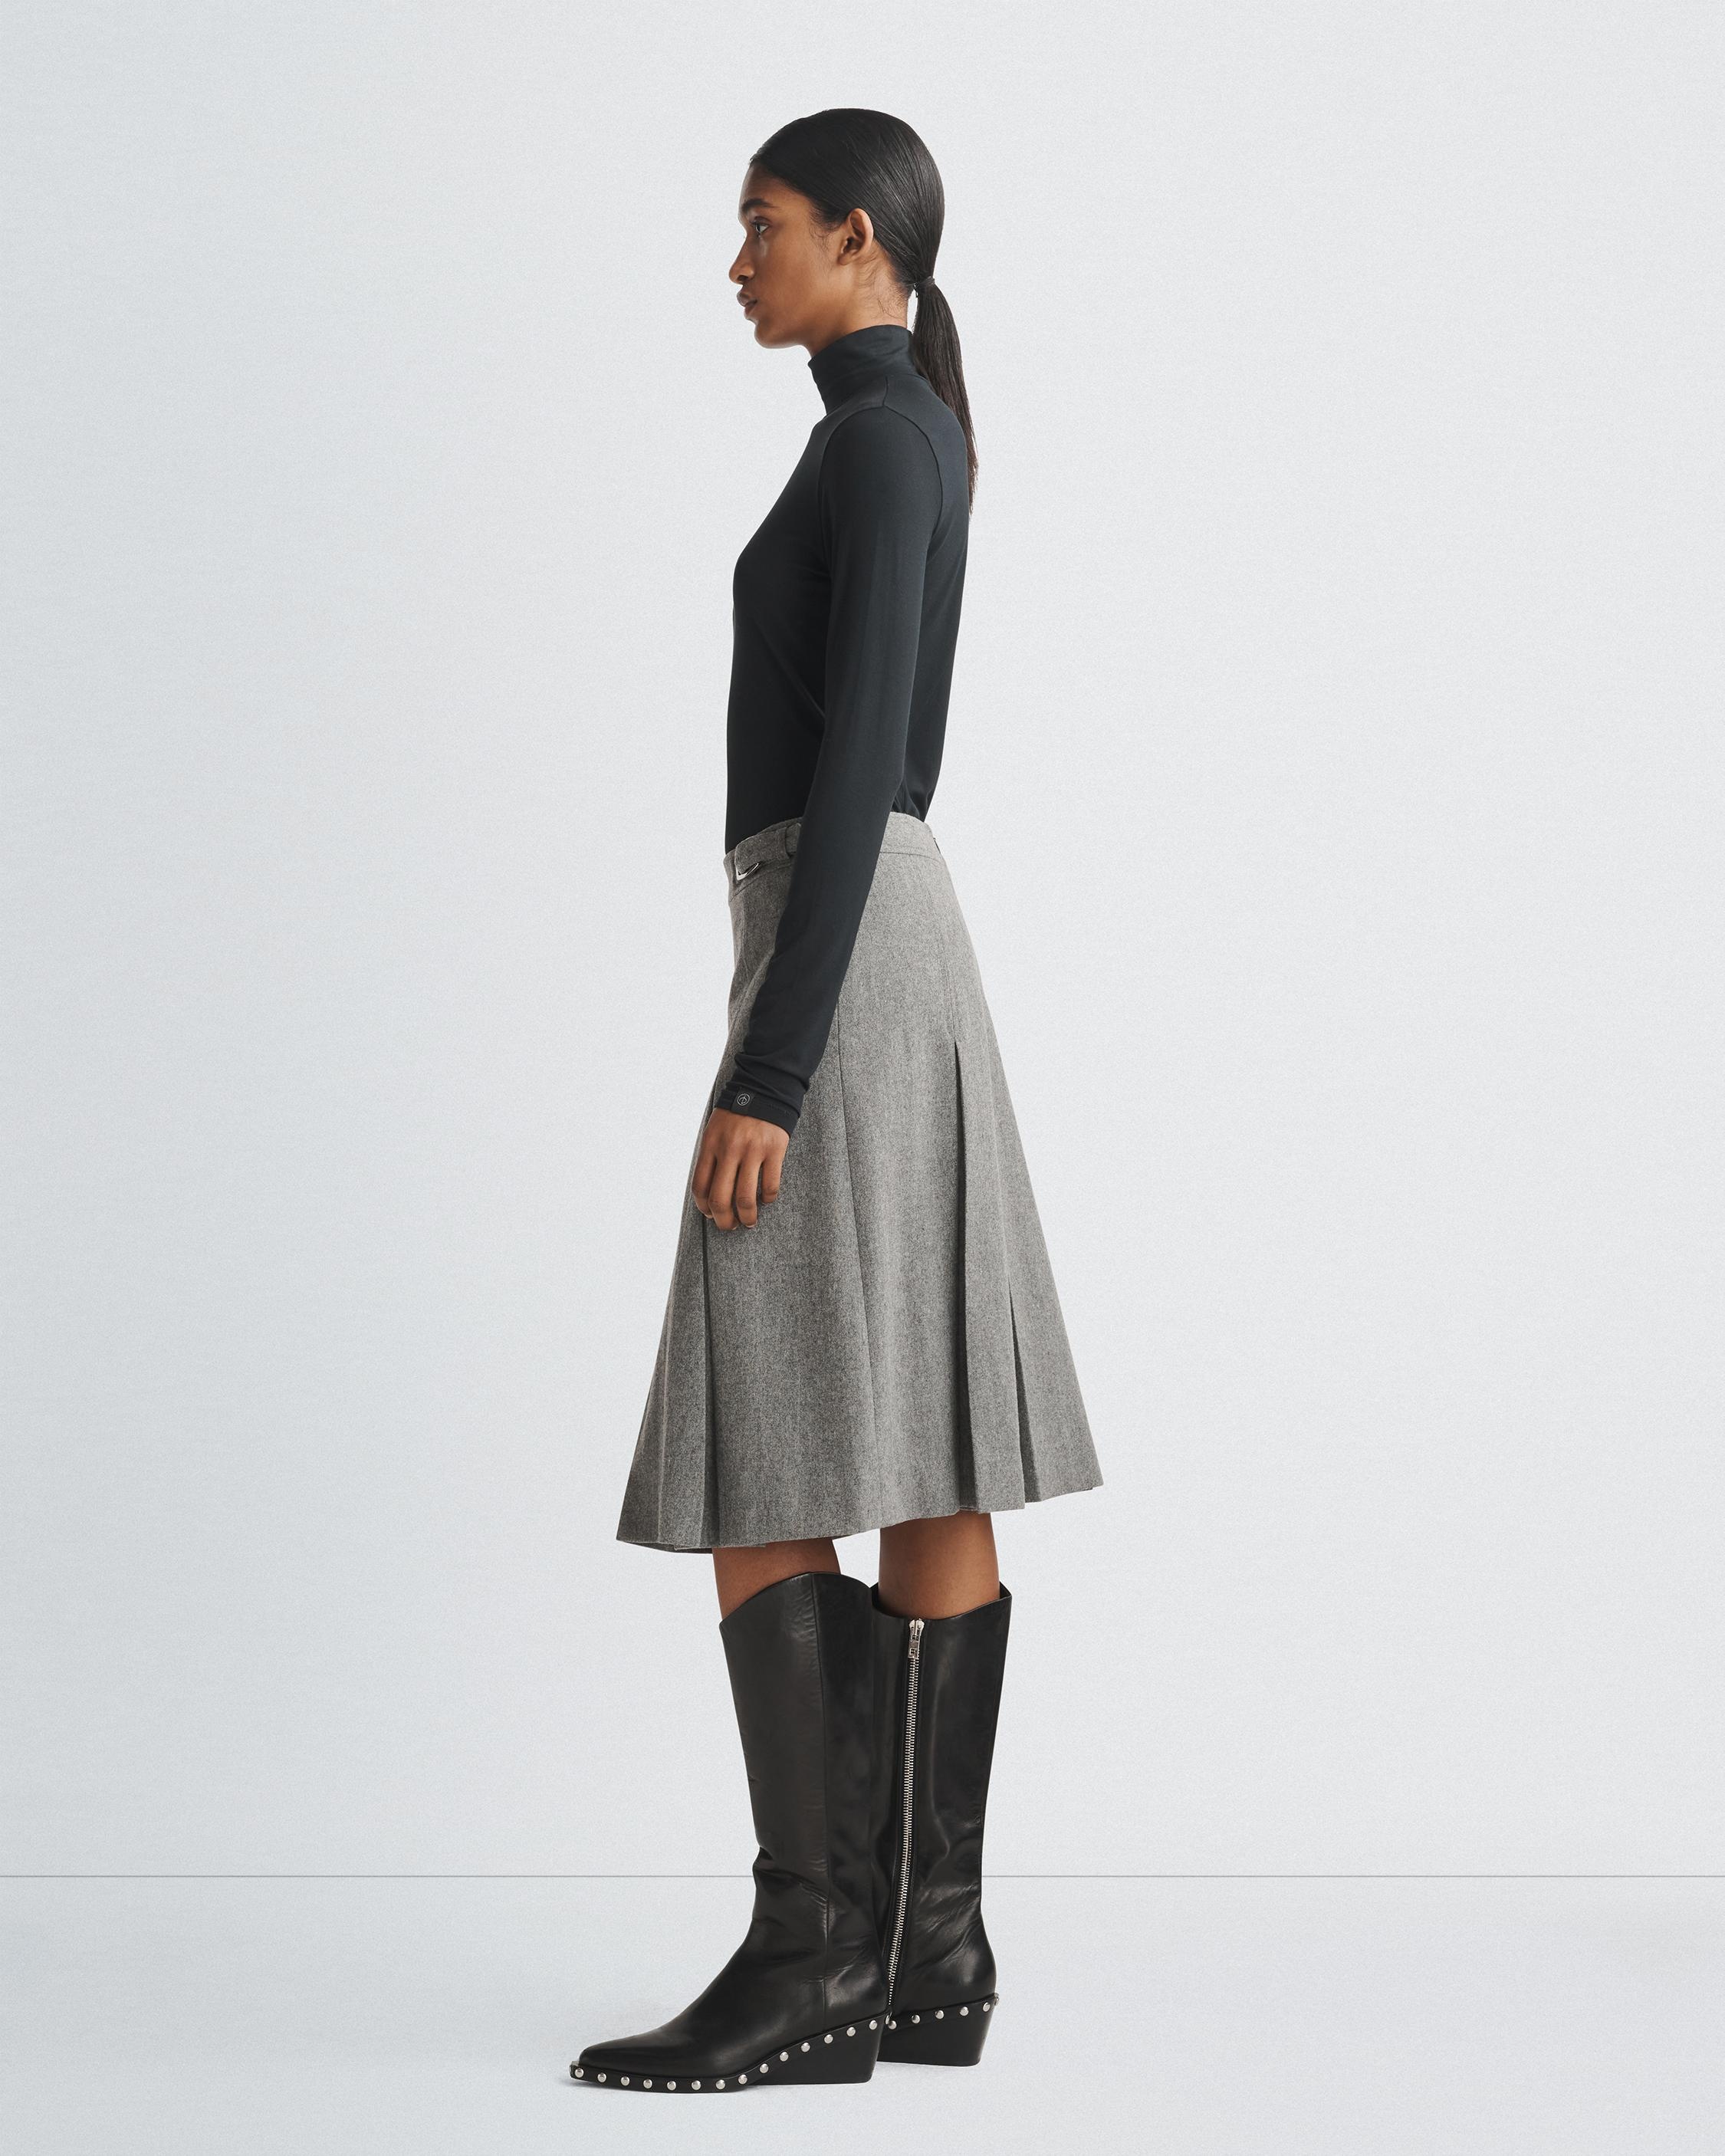 Garnet Italian Wool Skirt
Midi - 3